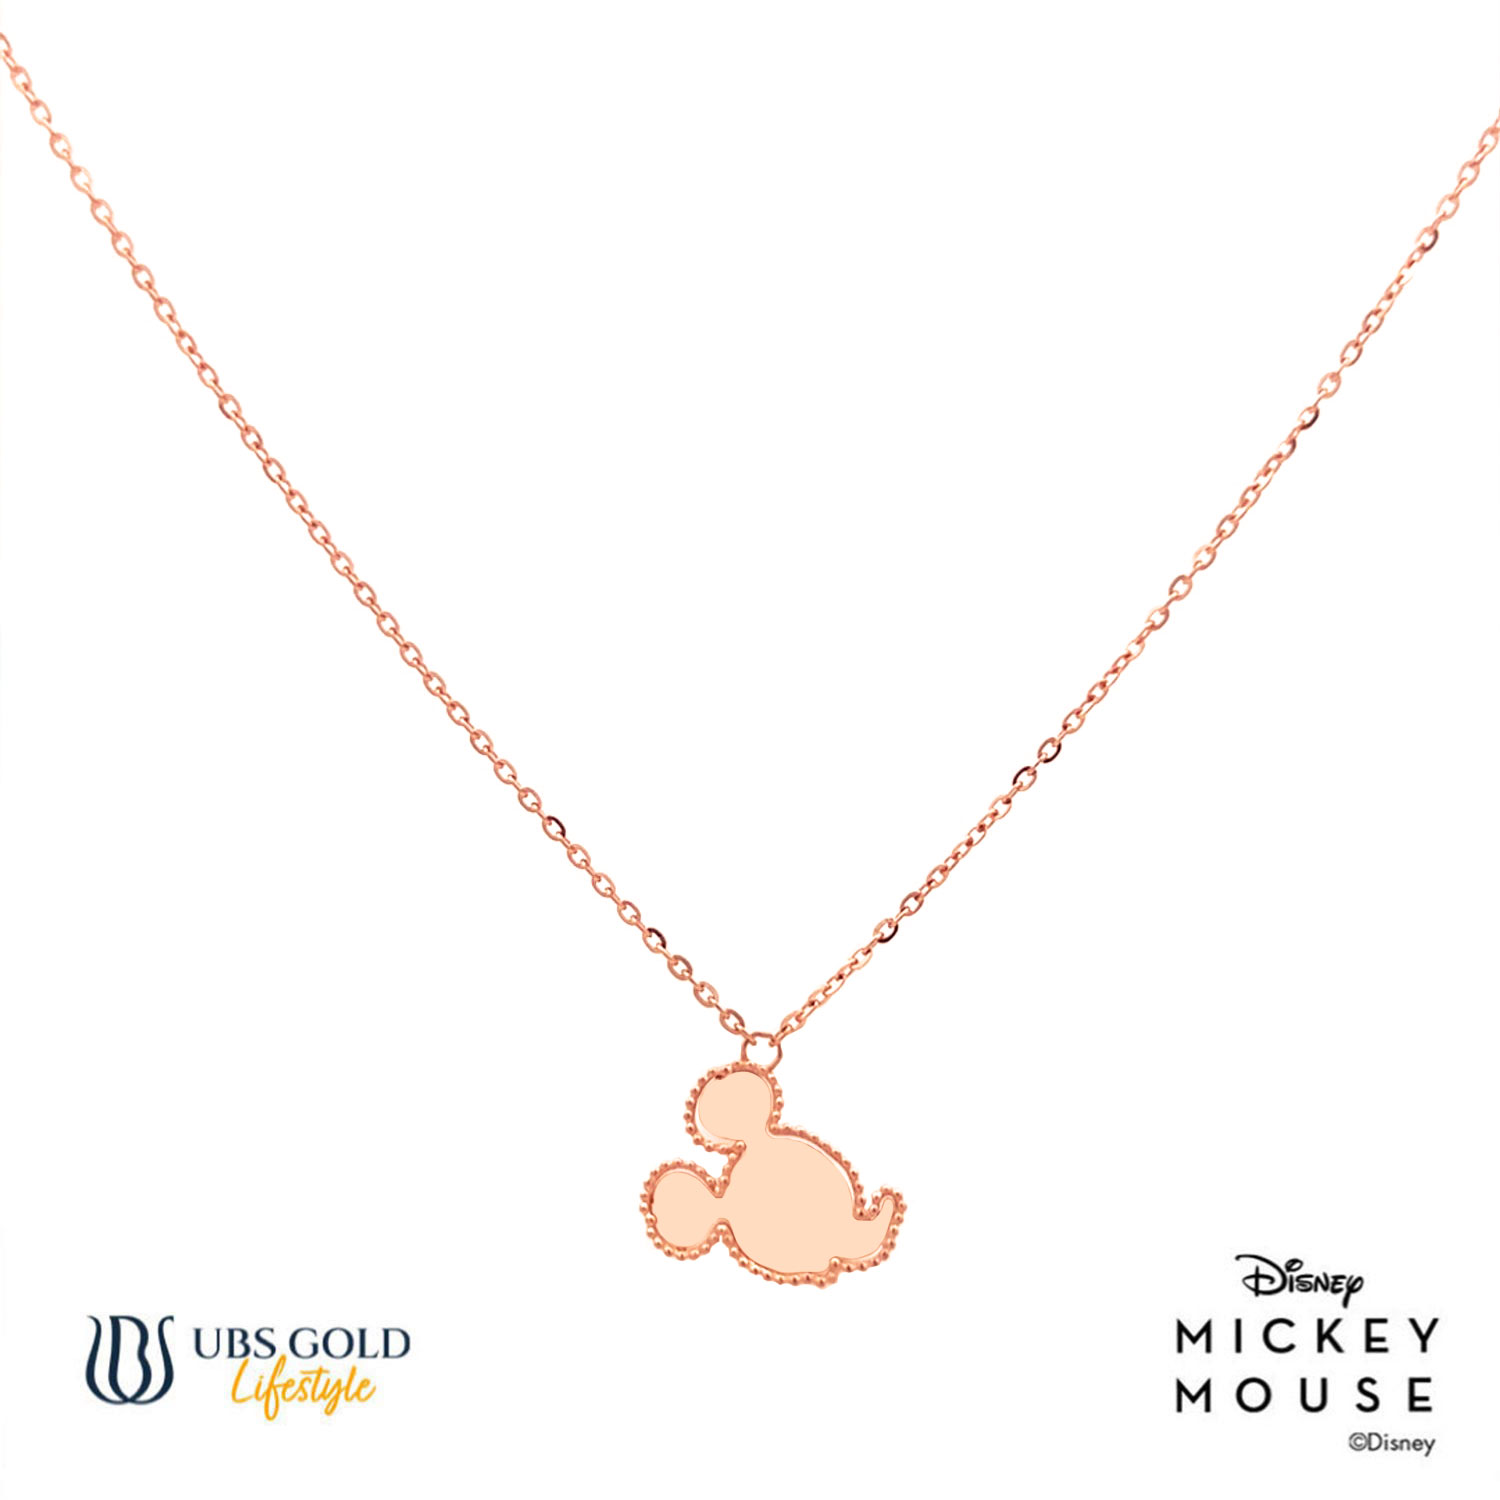 UBS Gold Kalung Emas Disney Mickey Mouse - Kky0488 - 17K